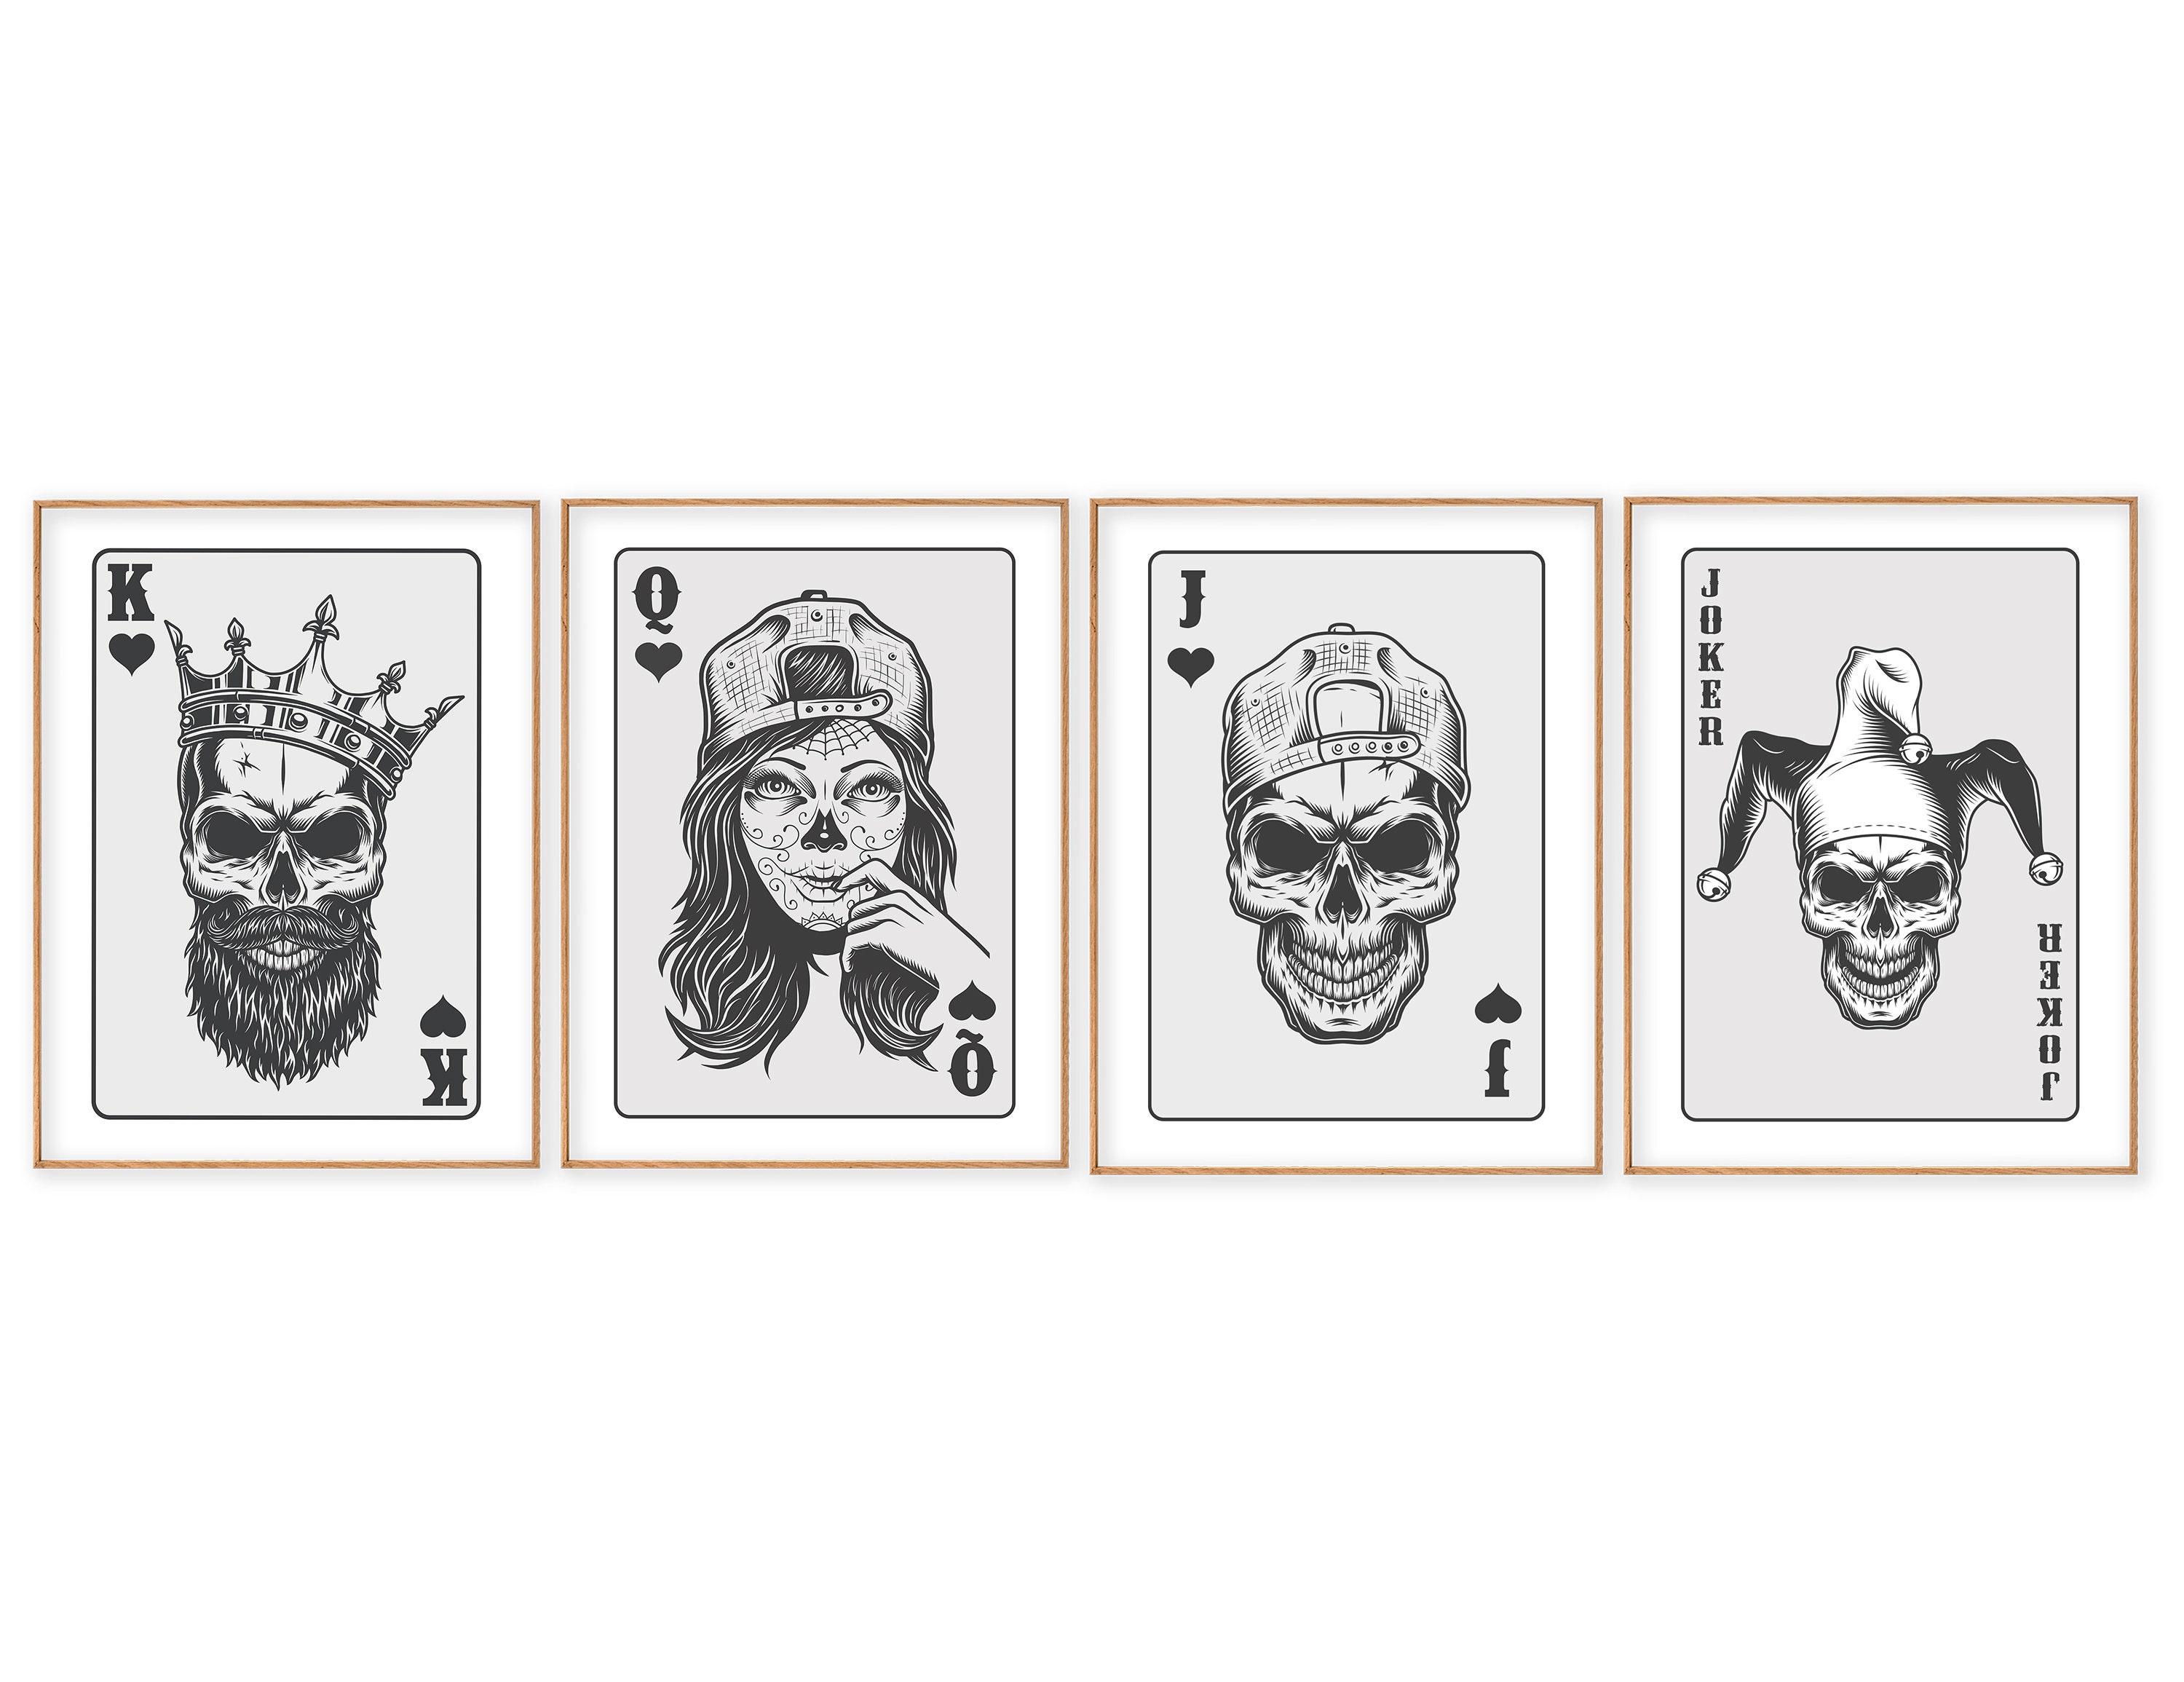 King, Queen, Jack and Joker by Riomak on DeviantArt